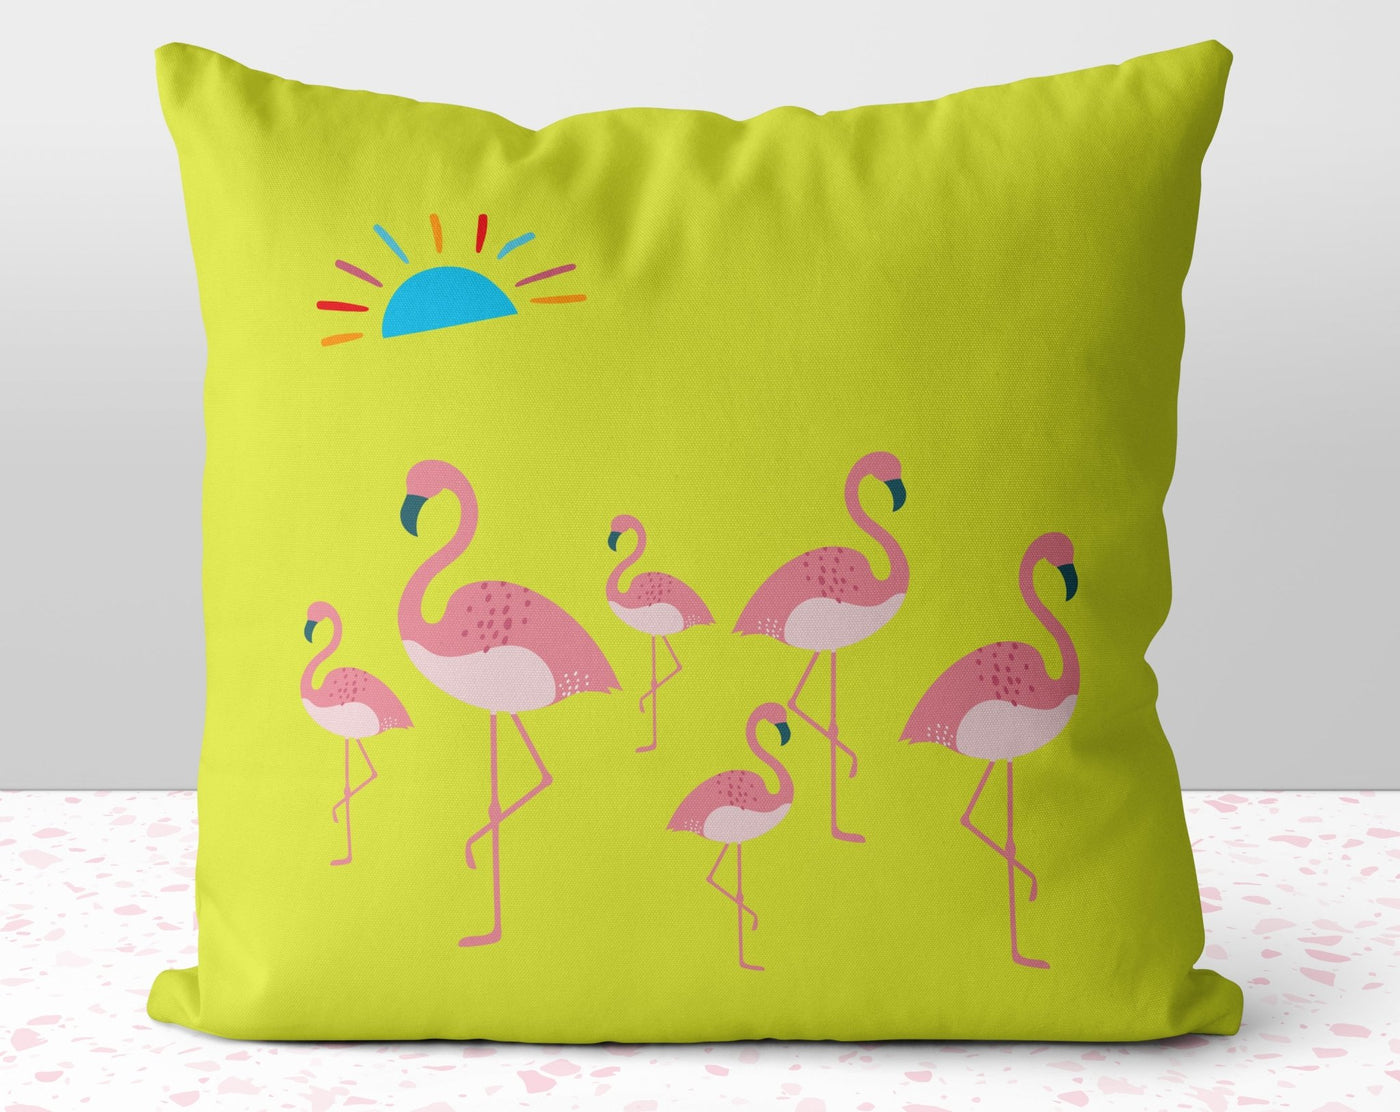 Flamboyance of Flamingos Summer Fun Lemon Lime Pillow Throw Cover with Insert - Cush Potato Pillows